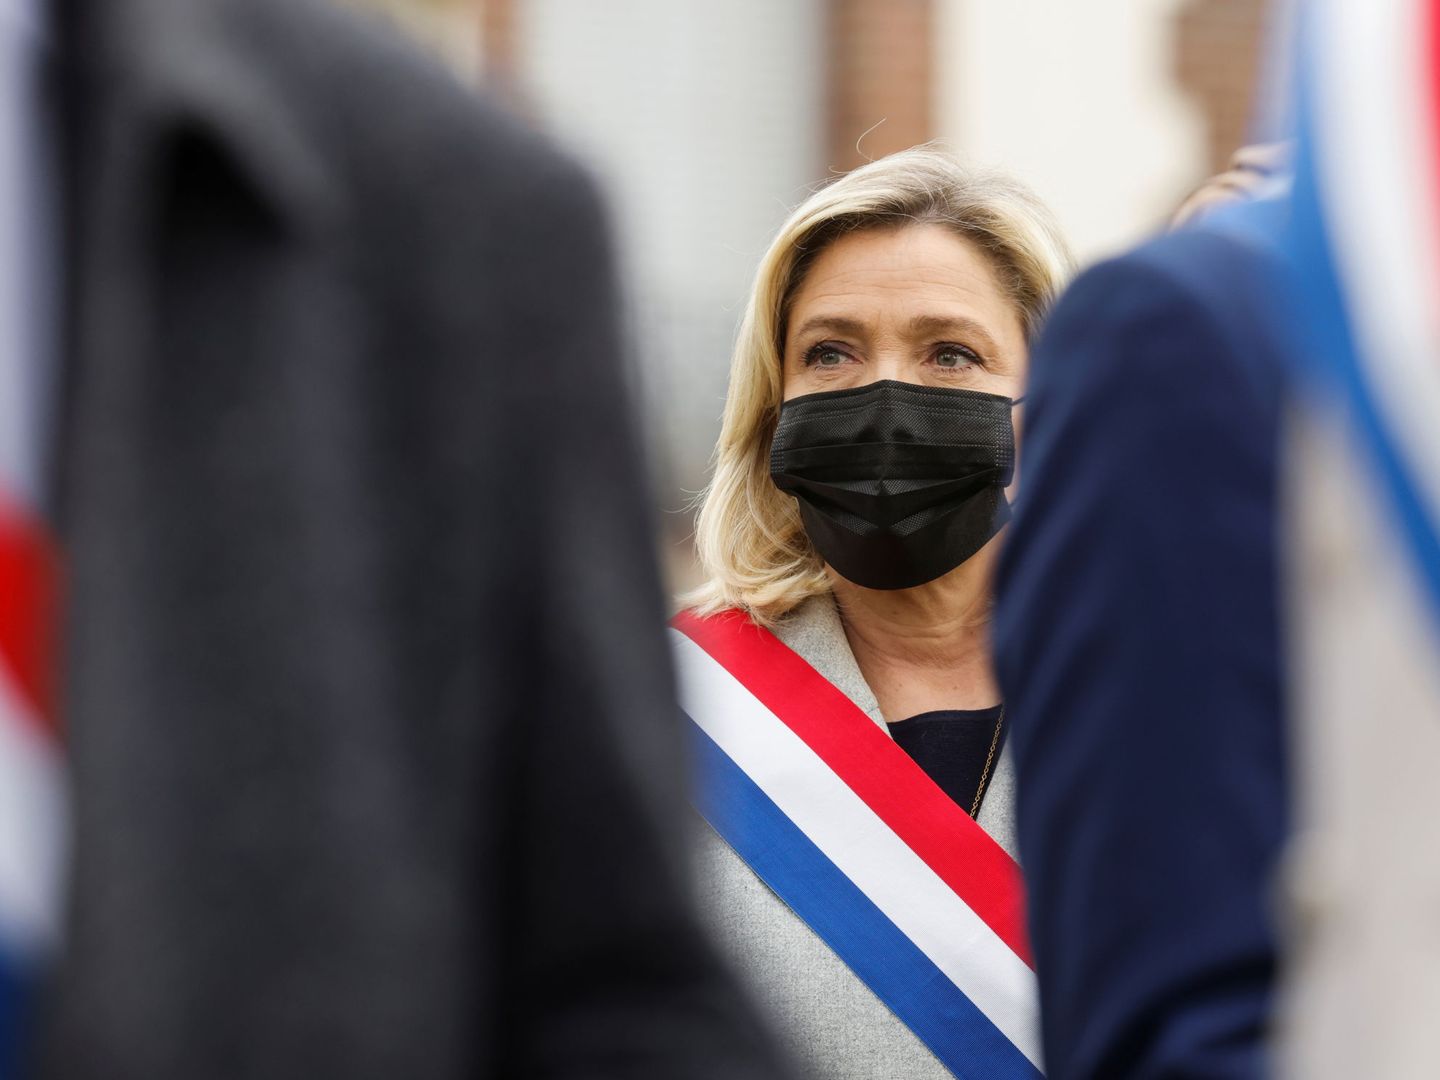 Marine Le Pen, de Reagrupación Nacional —antiguo Frente Nacional francés—. (Reuters)